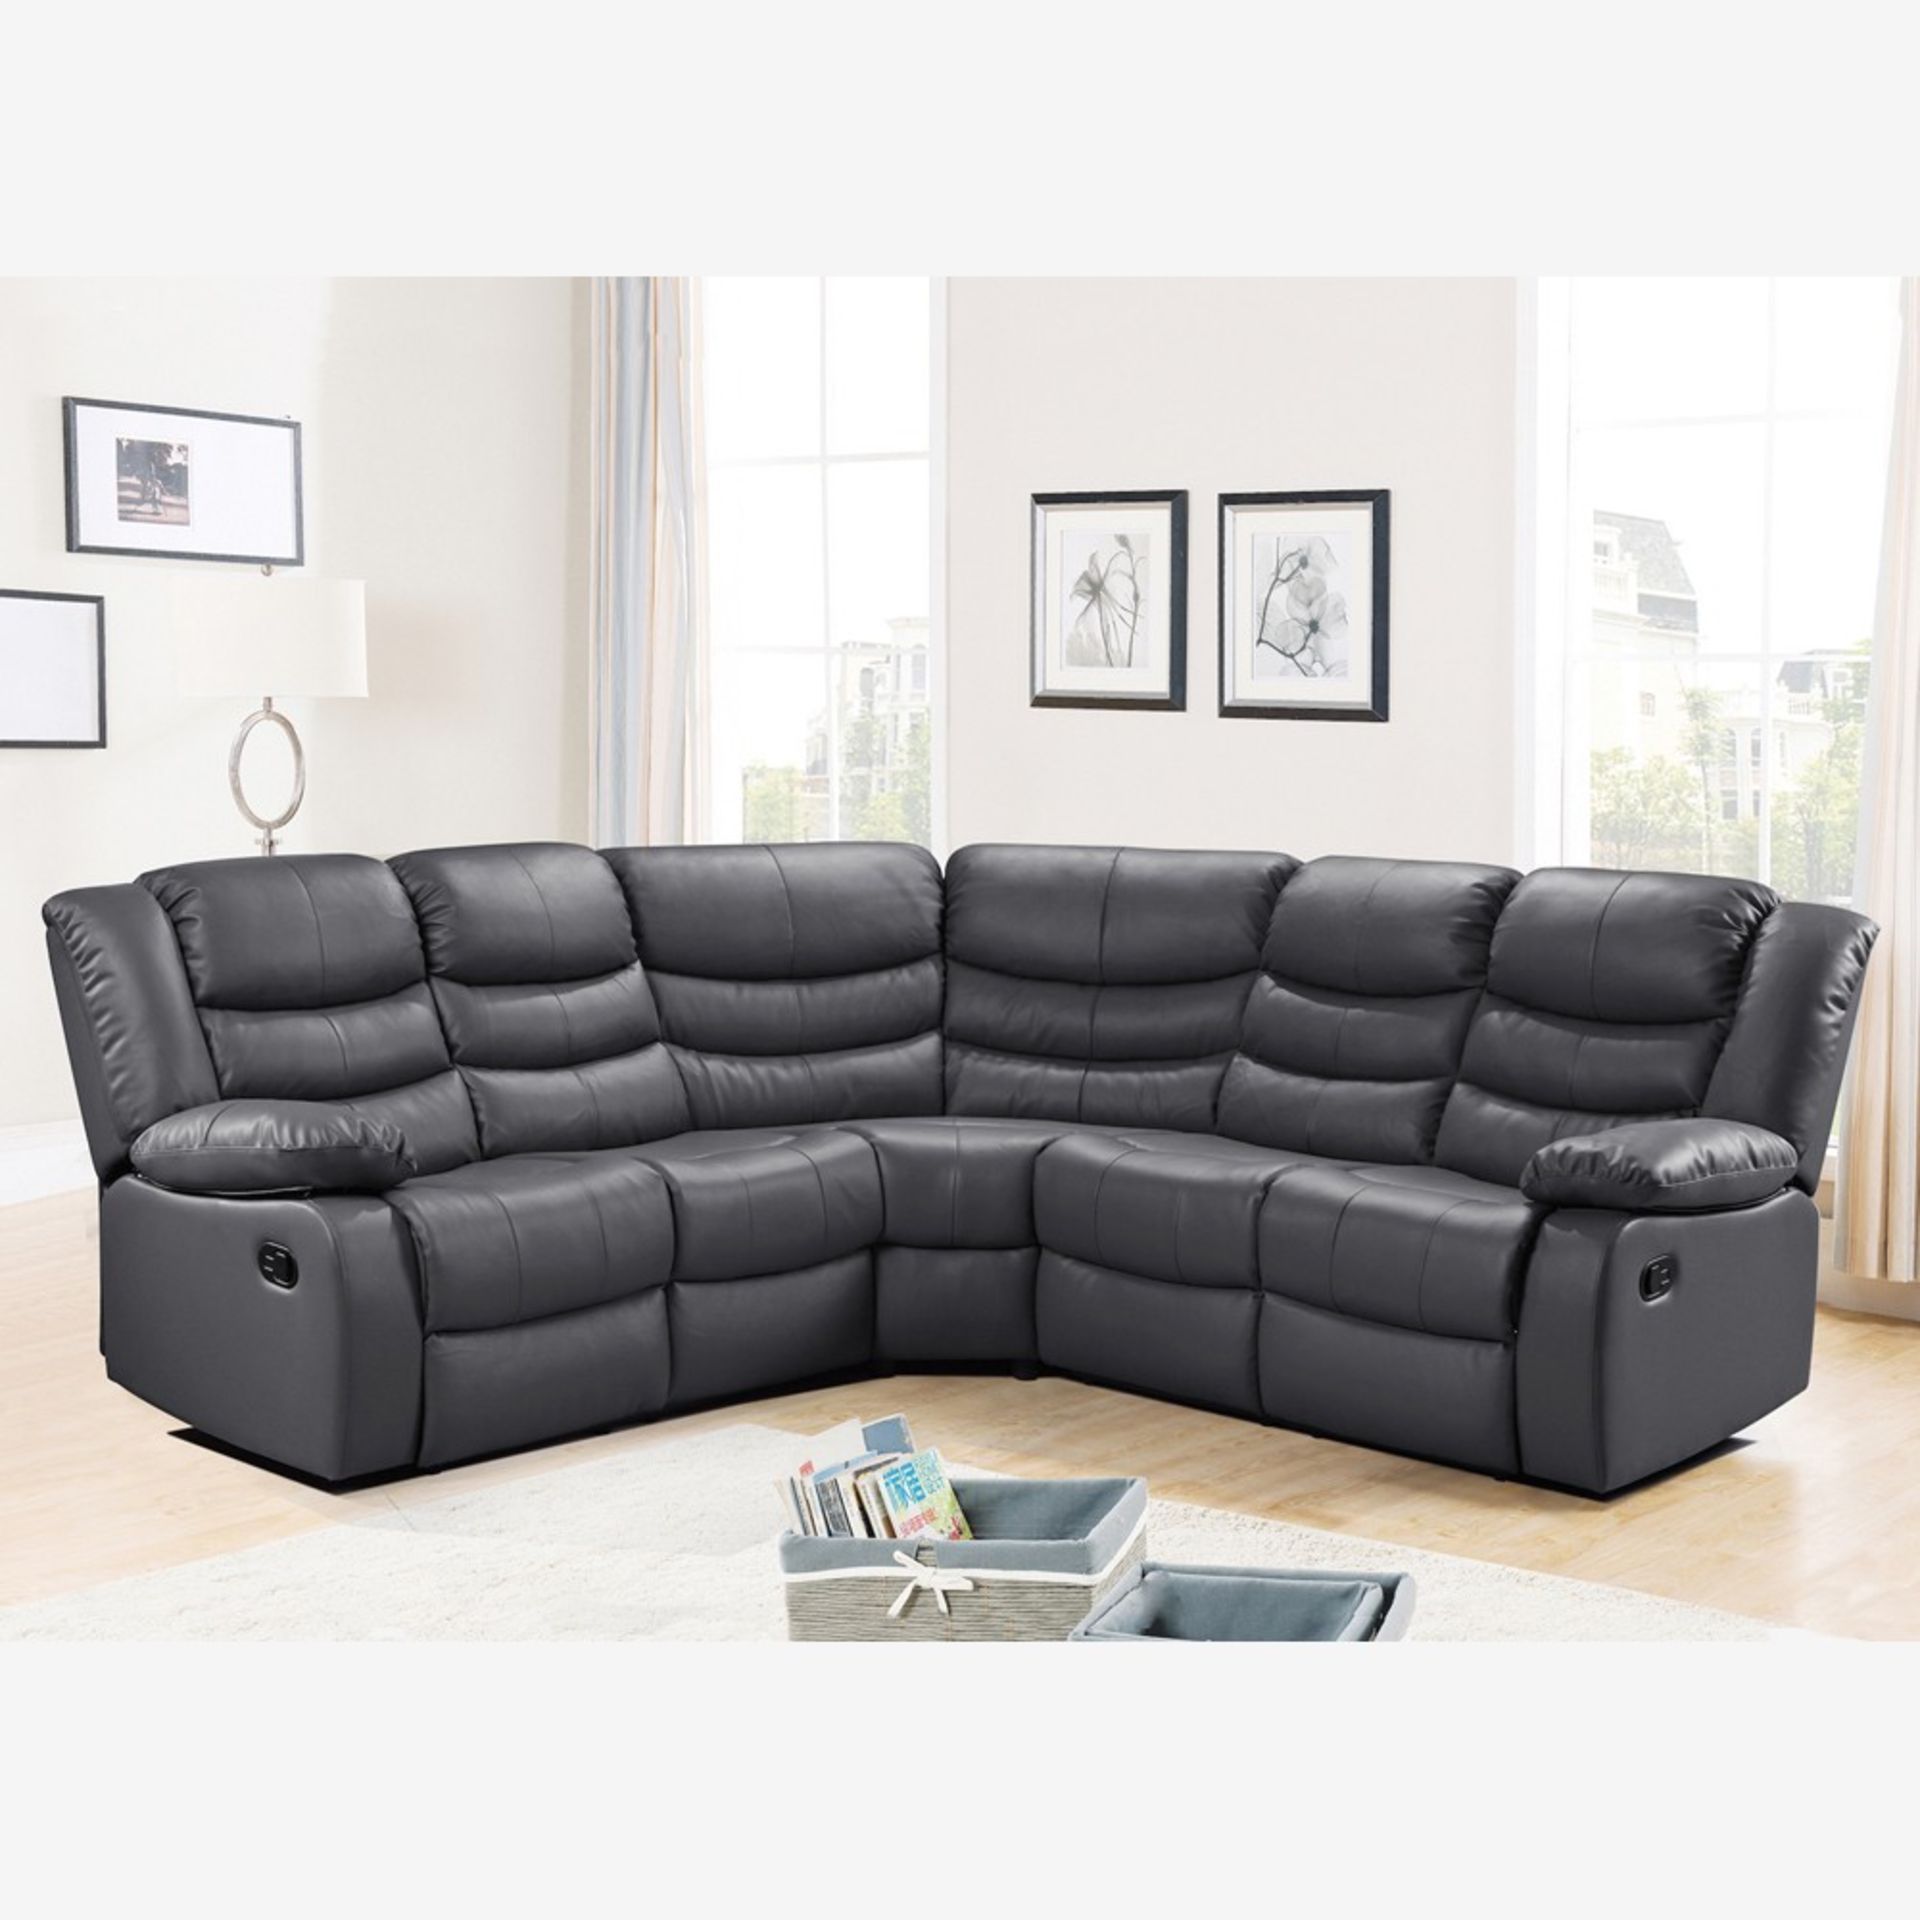 Boston black leather reclining corner sofa - Image 2 of 2